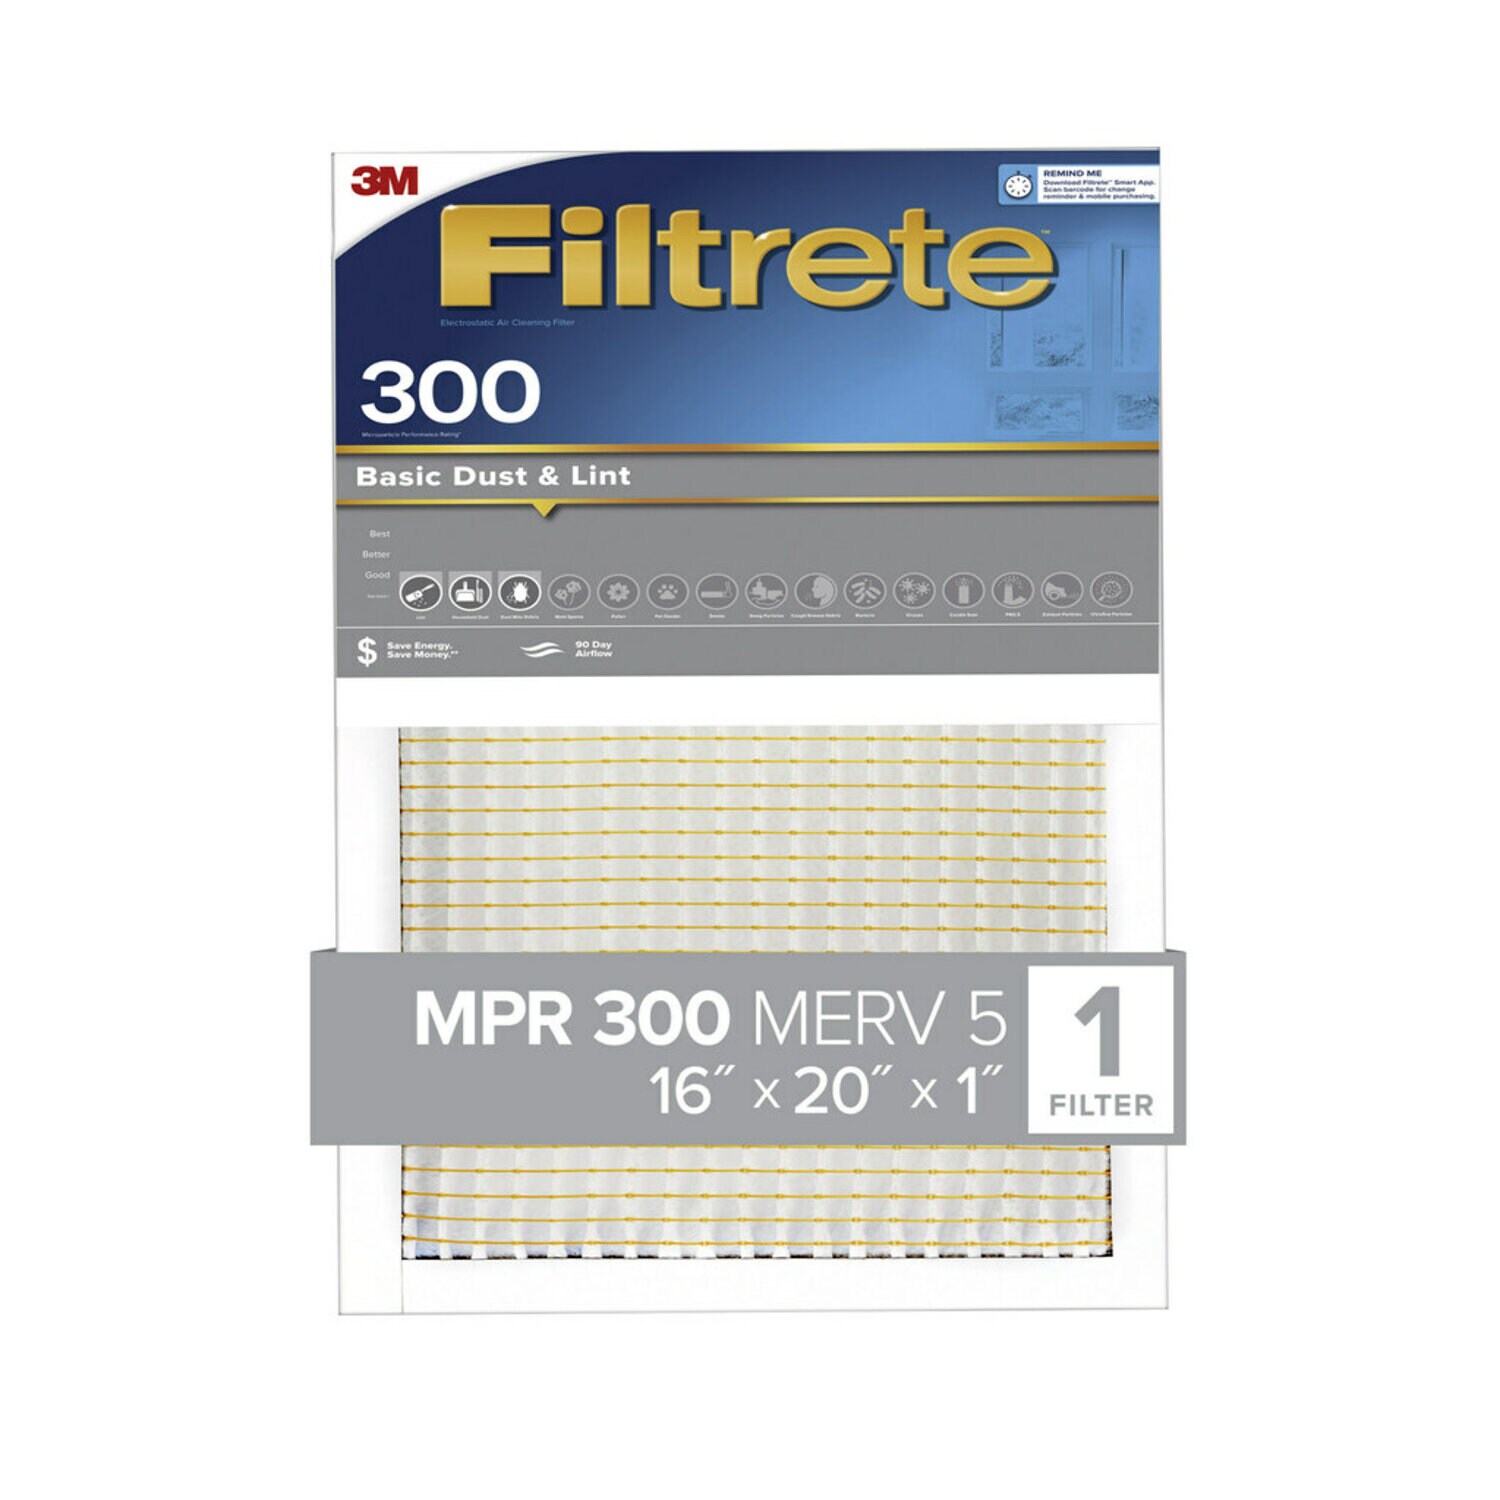 7100184247 - Filtrete Basic Dust & Lint Air Filter, 300 MPR, 300-4, 16 in x 20 in x
1 in (40.6 cm x 50.8 cm x 2.5 cm)